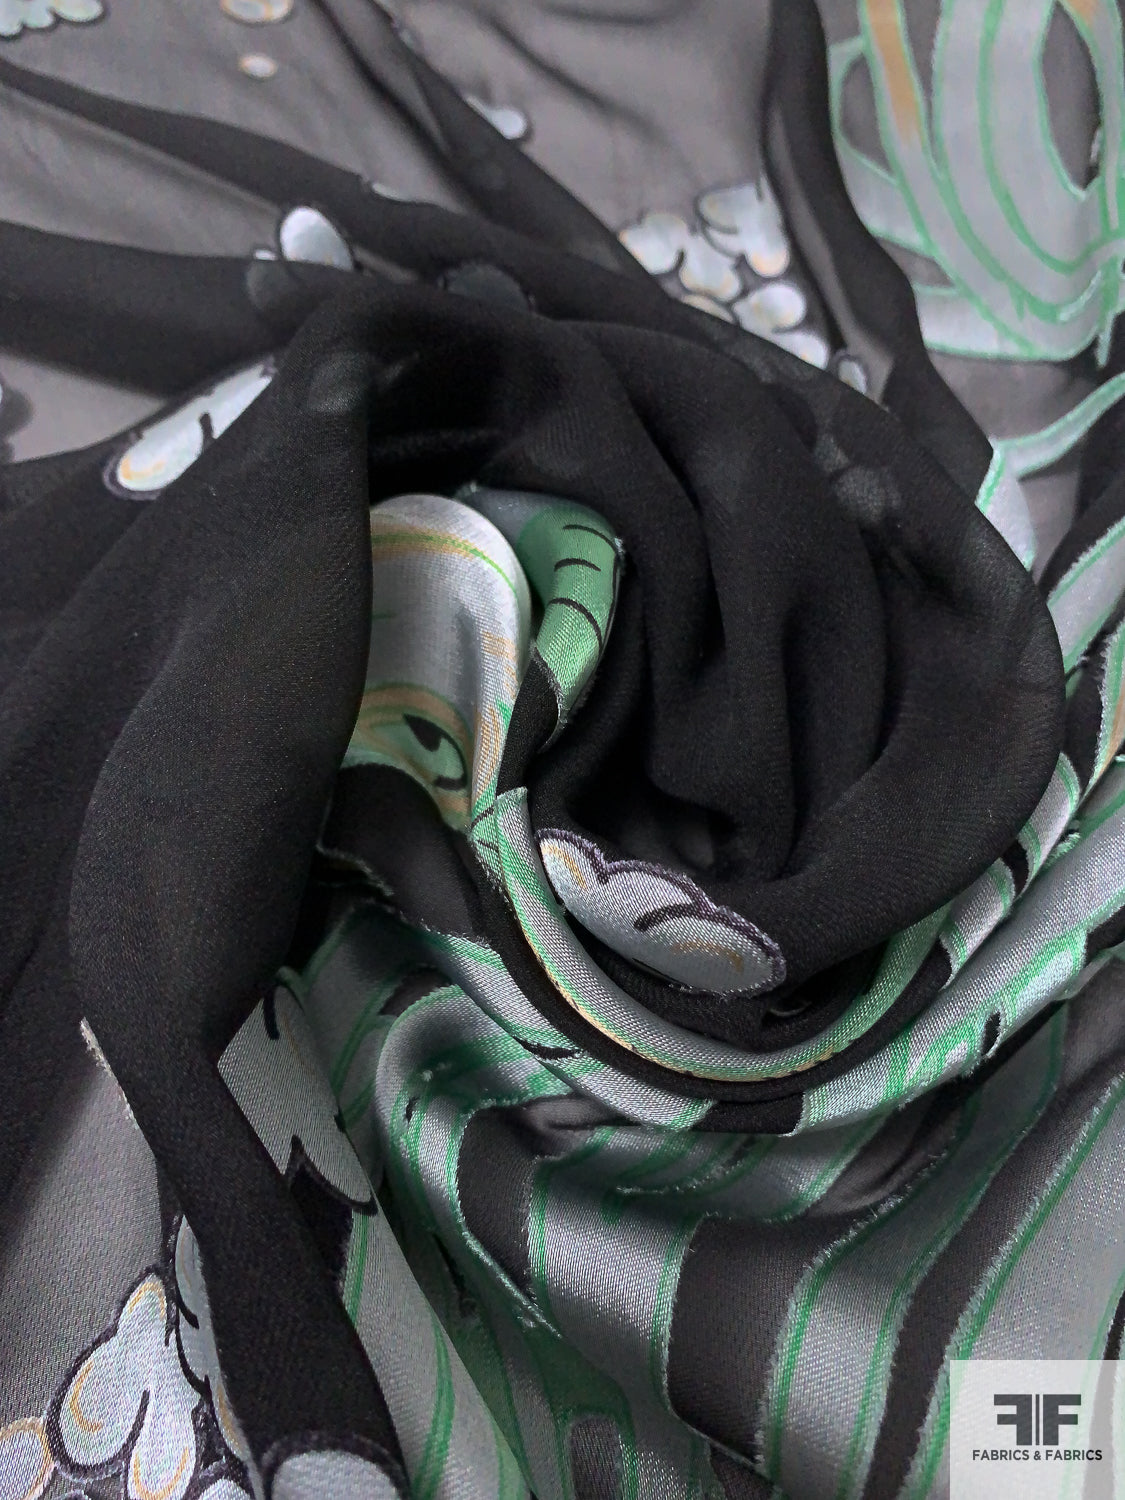 Fish Motif Printed Burnout Silk Chiffon - Black / Grey / Mint Green / Nude